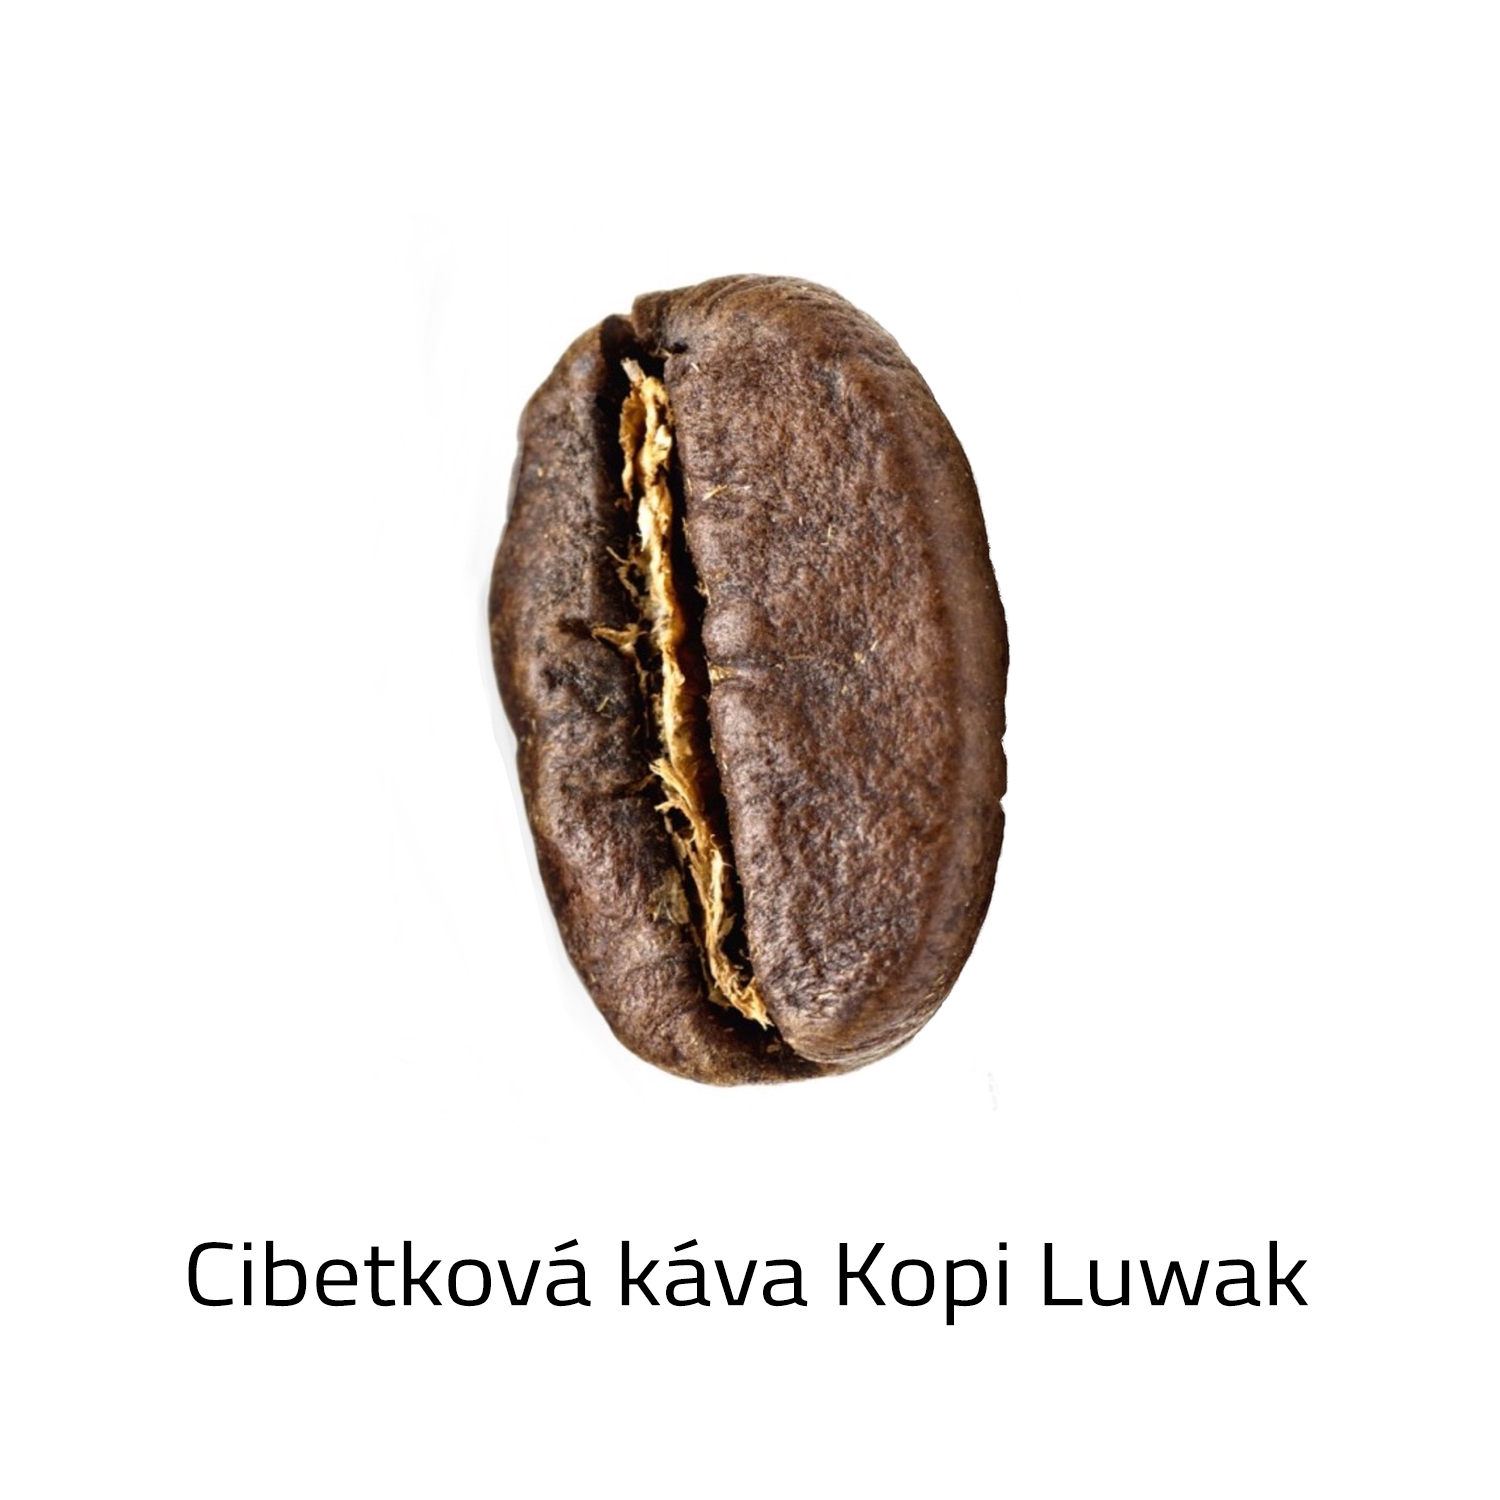 Čerstvě pražená Cibetková káva mletá - Kopi Luwak 100g